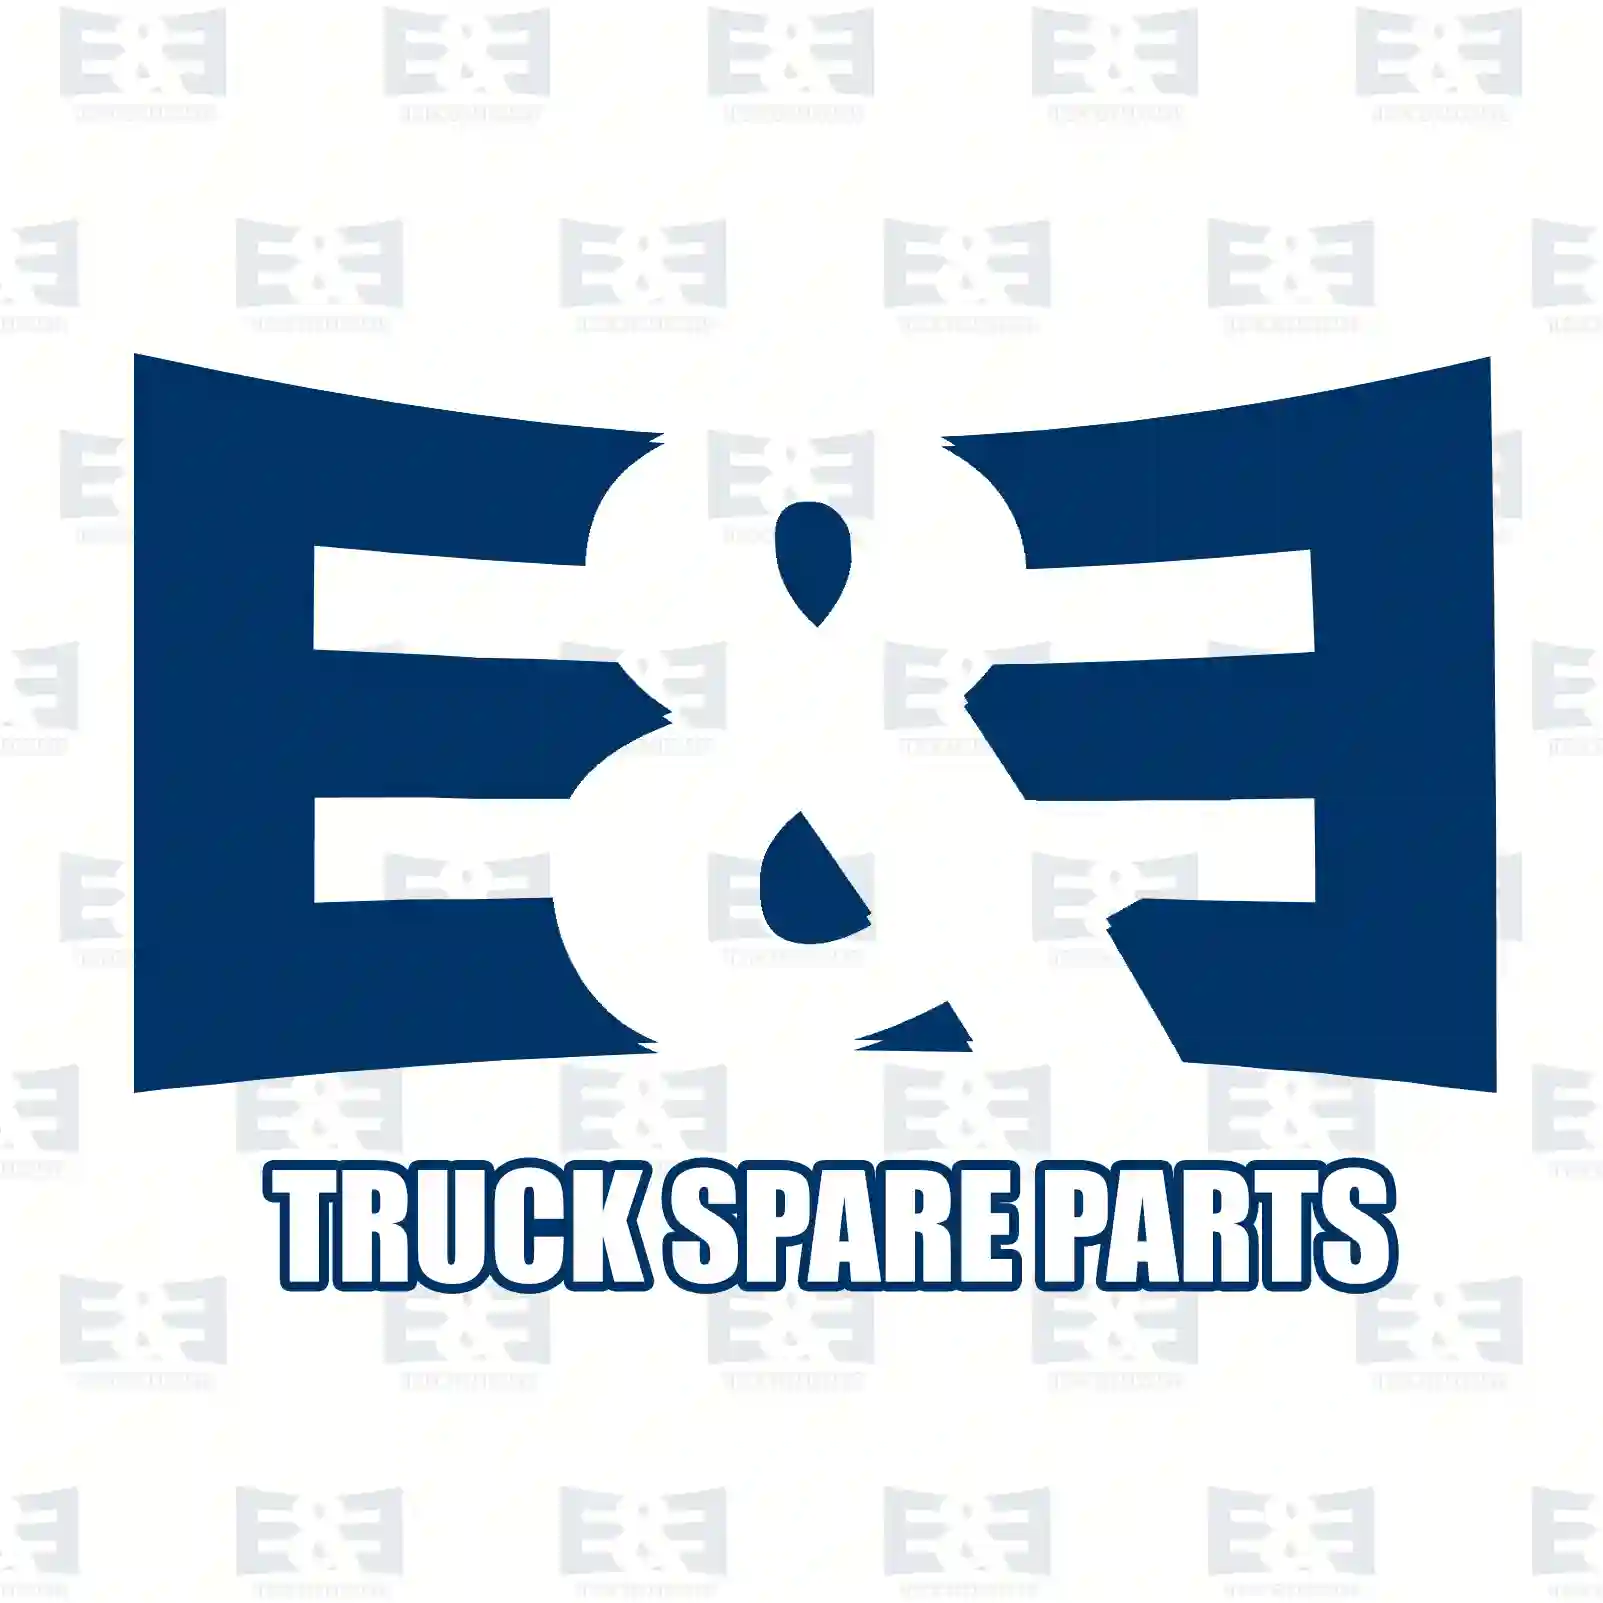 Ball joint, right hand thread, 2E2277713, 5000442683, 5516 ||  2E2277713 E&E Truck Spare Parts | Truck Spare Parts, Auotomotive Spare Parts Ball joint, right hand thread, 2E2277713, 5000442683, 5516 ||  2E2277713 E&E Truck Spare Parts | Truck Spare Parts, Auotomotive Spare Parts